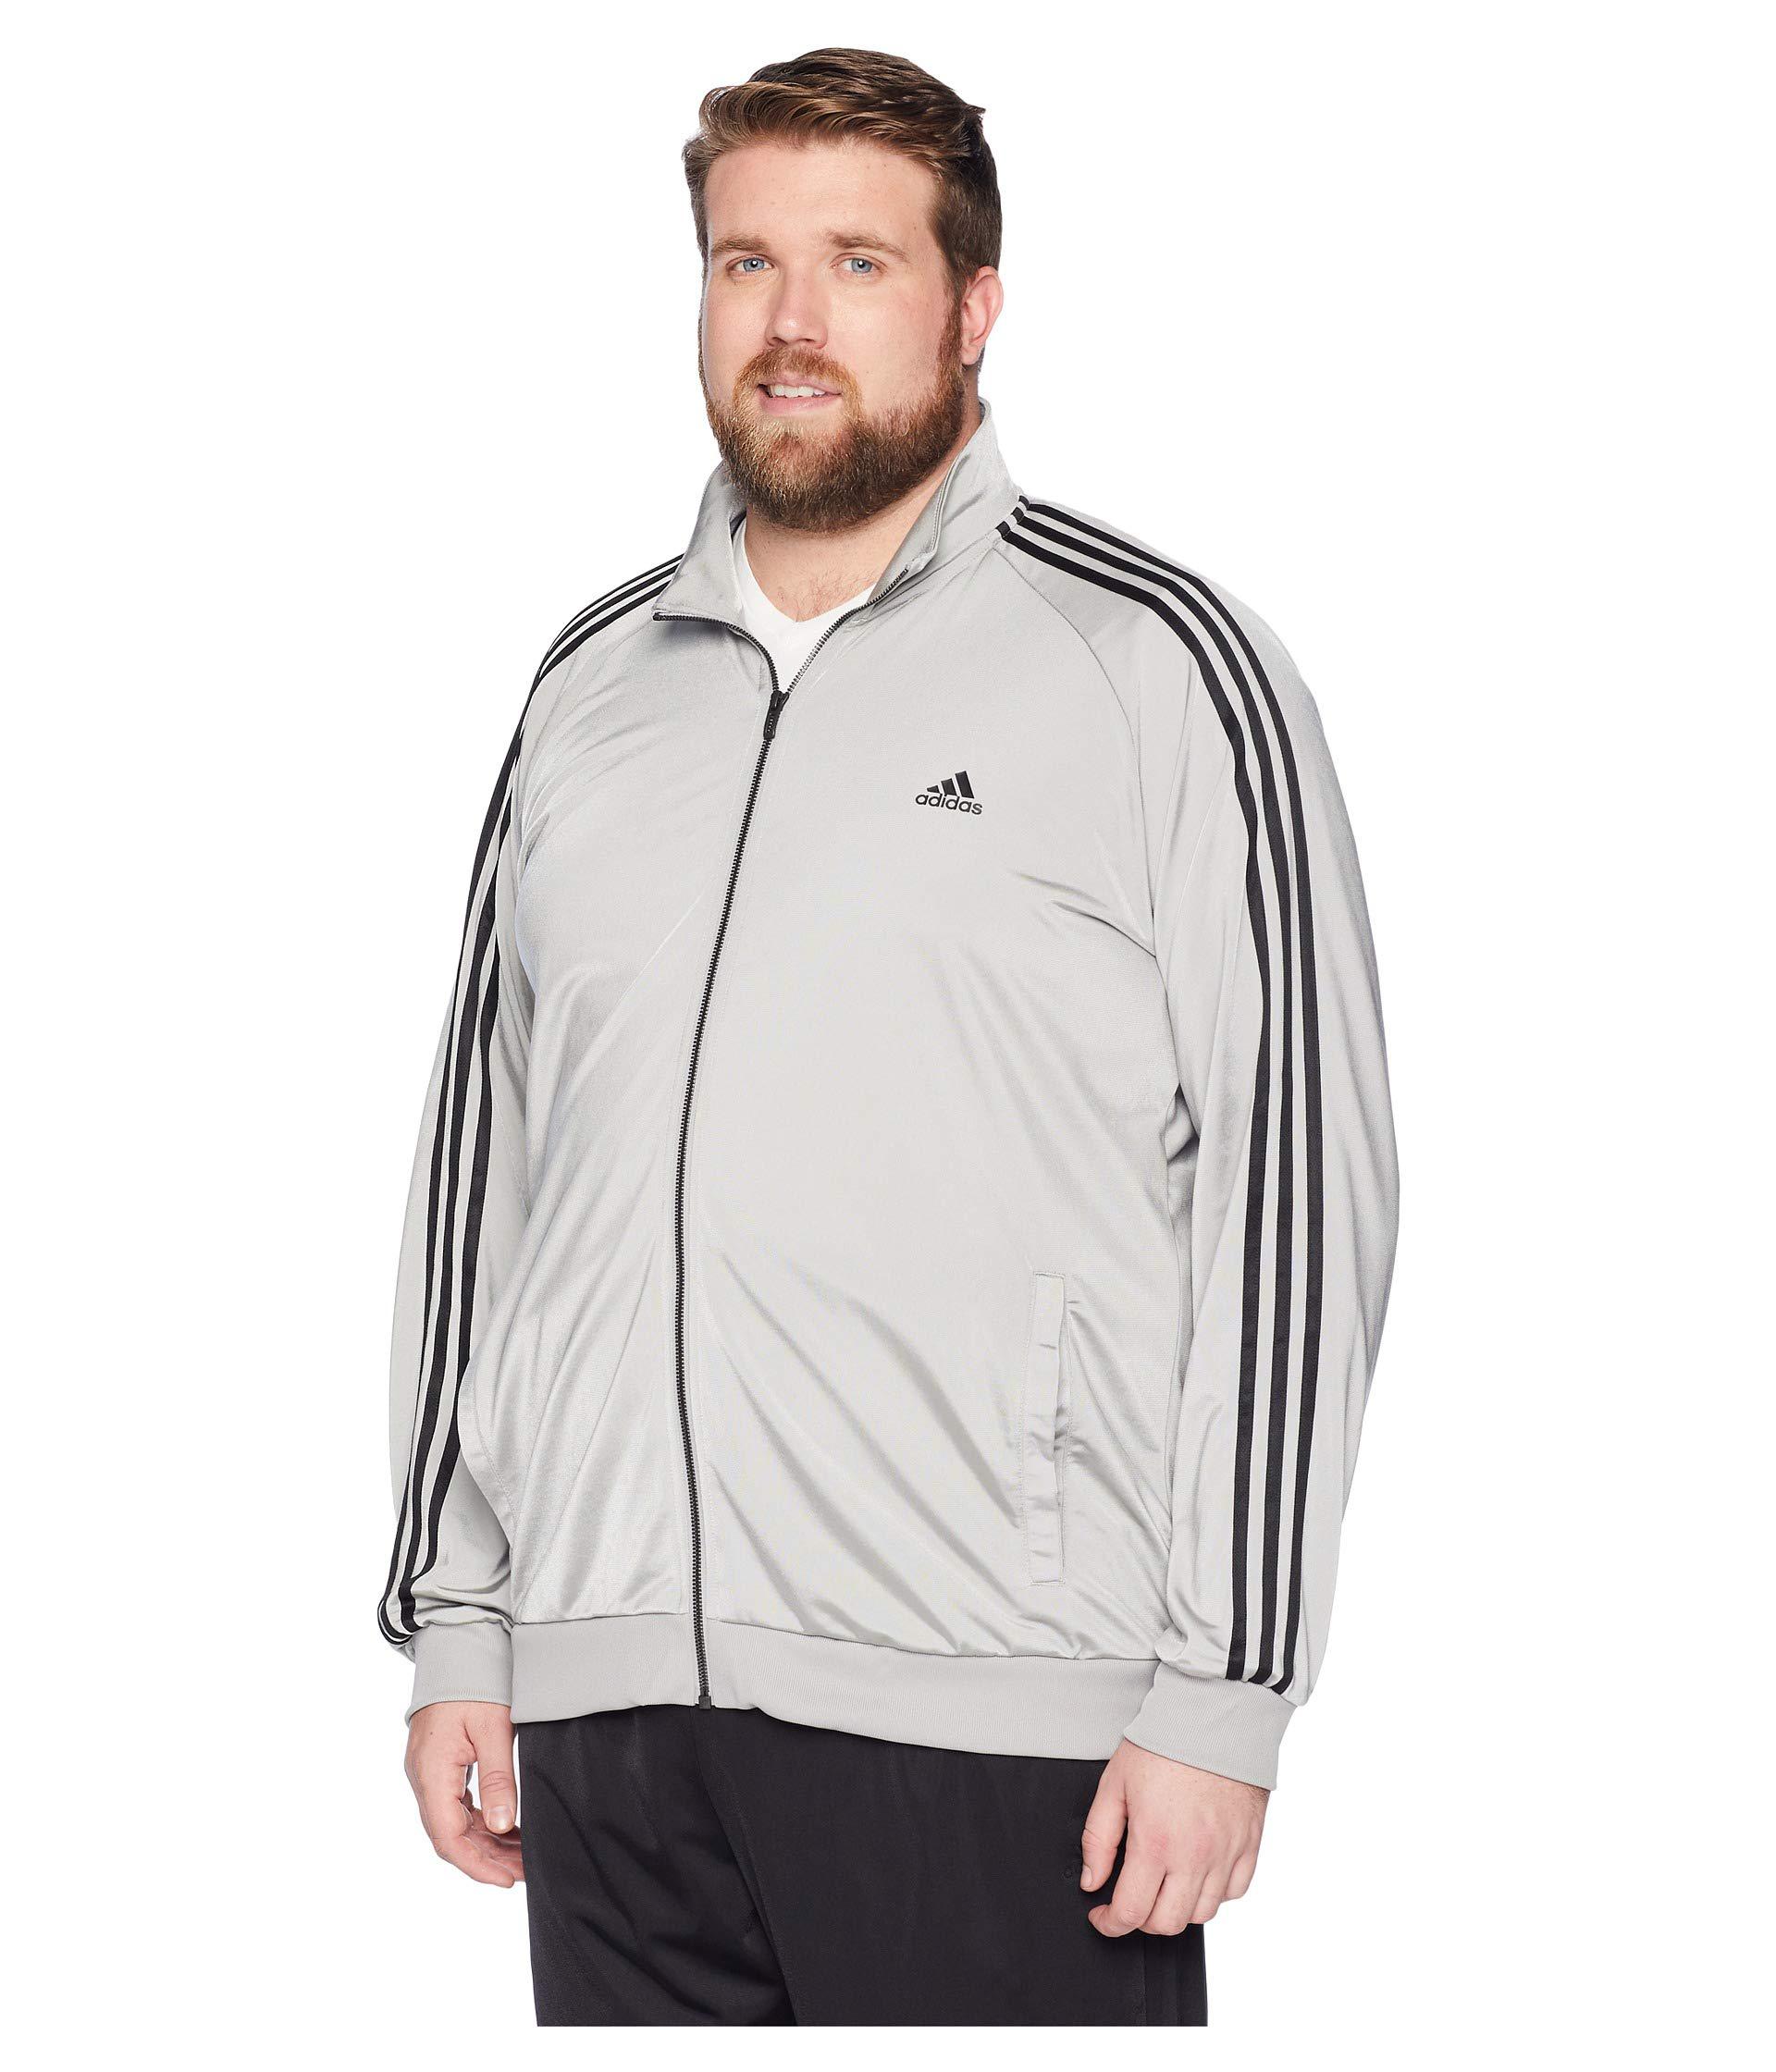 adidas track jacket big and tall